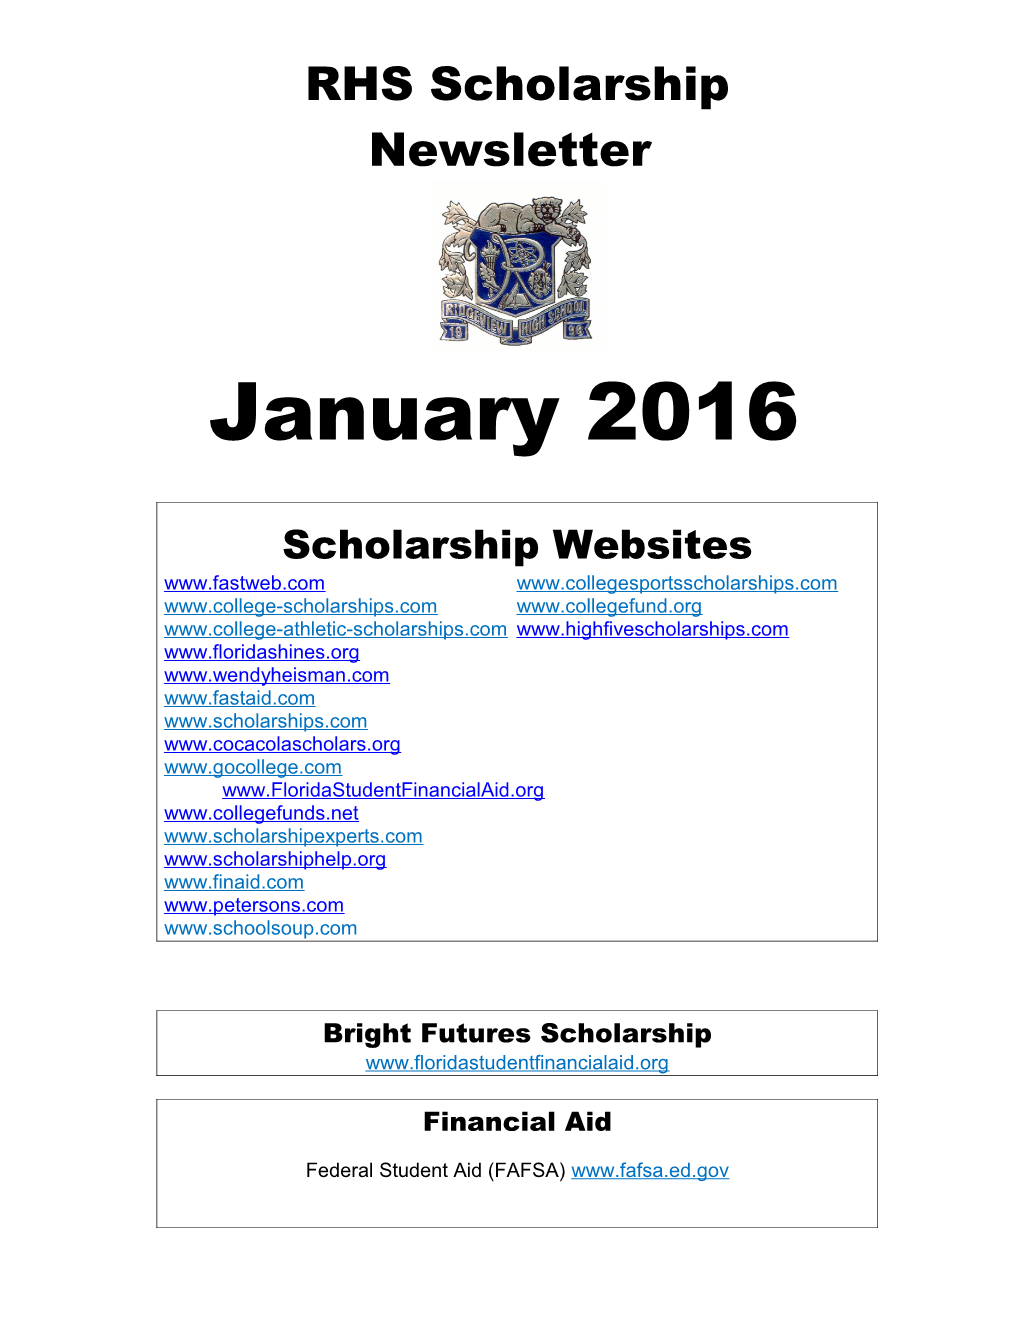 RHS Scholarship Newsletter